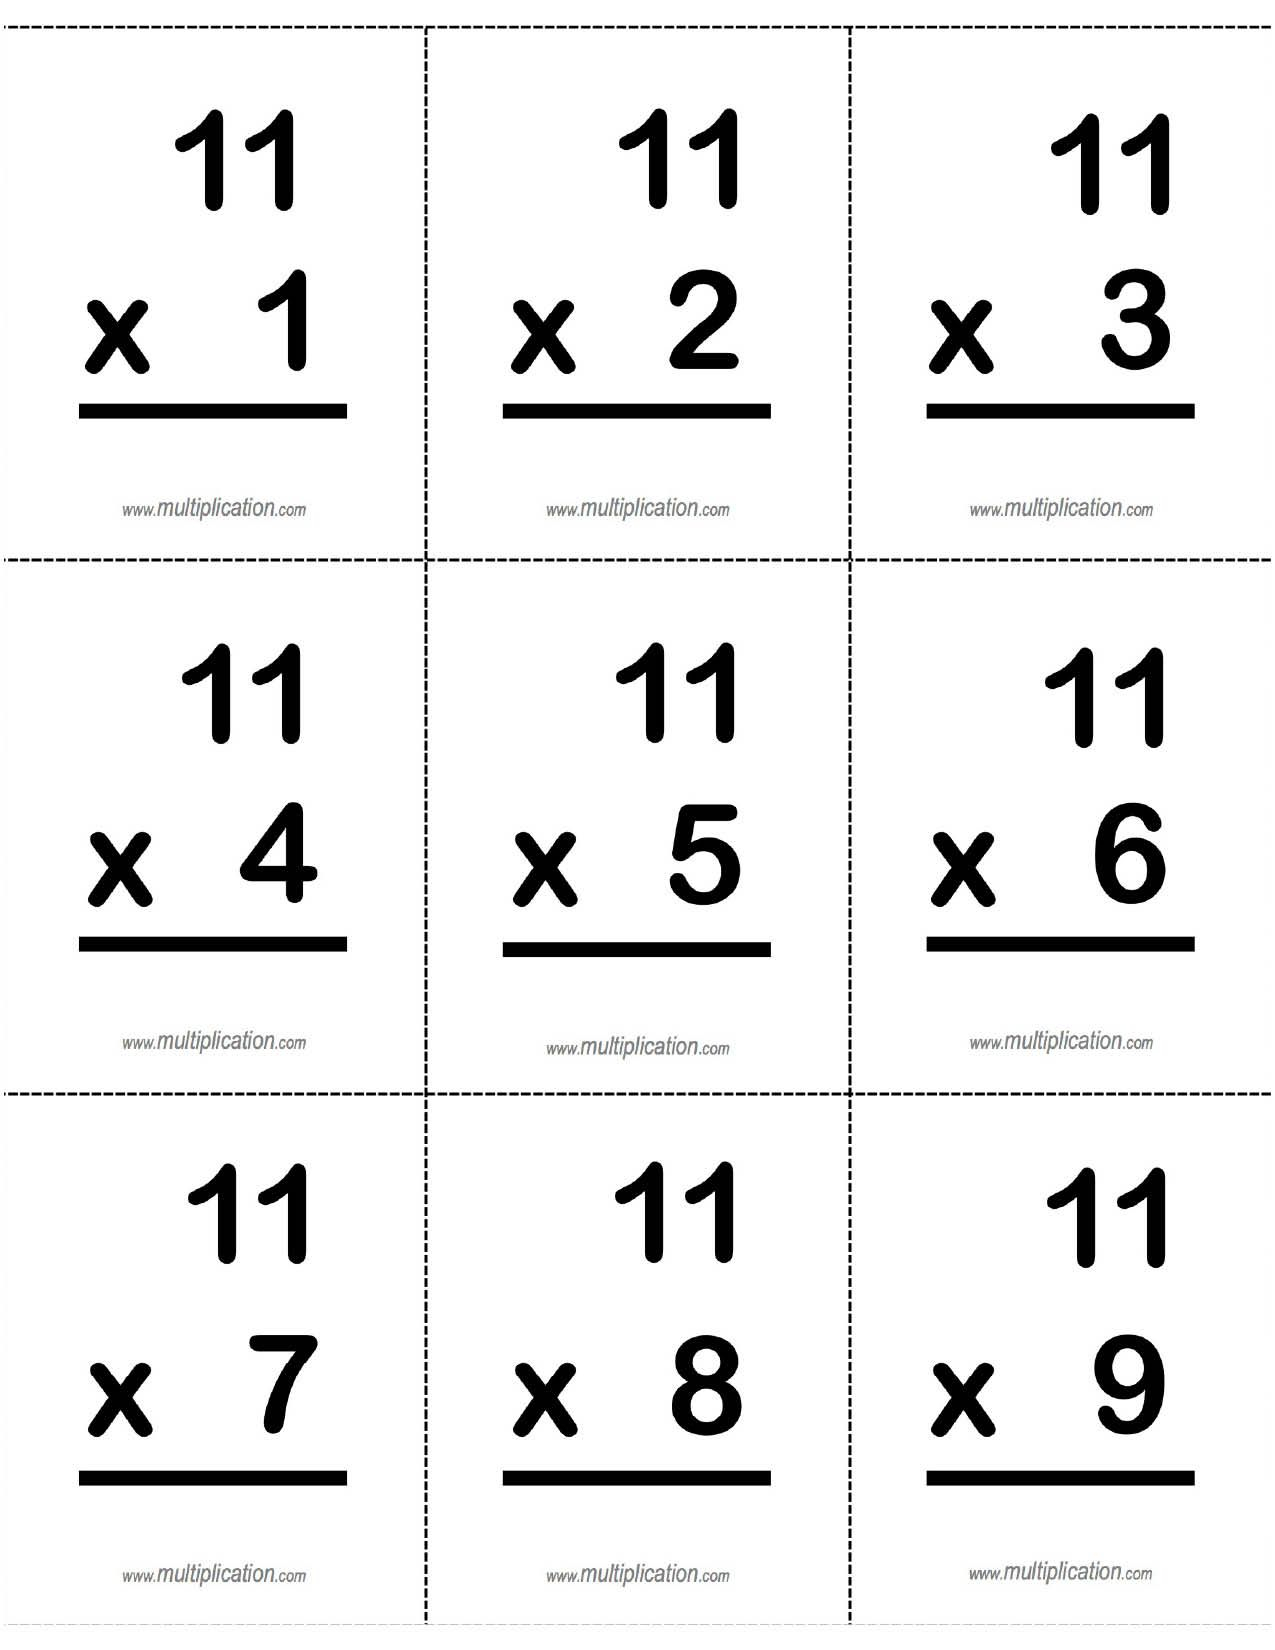 free-multiplication-flash-cards-printable-printable-templates